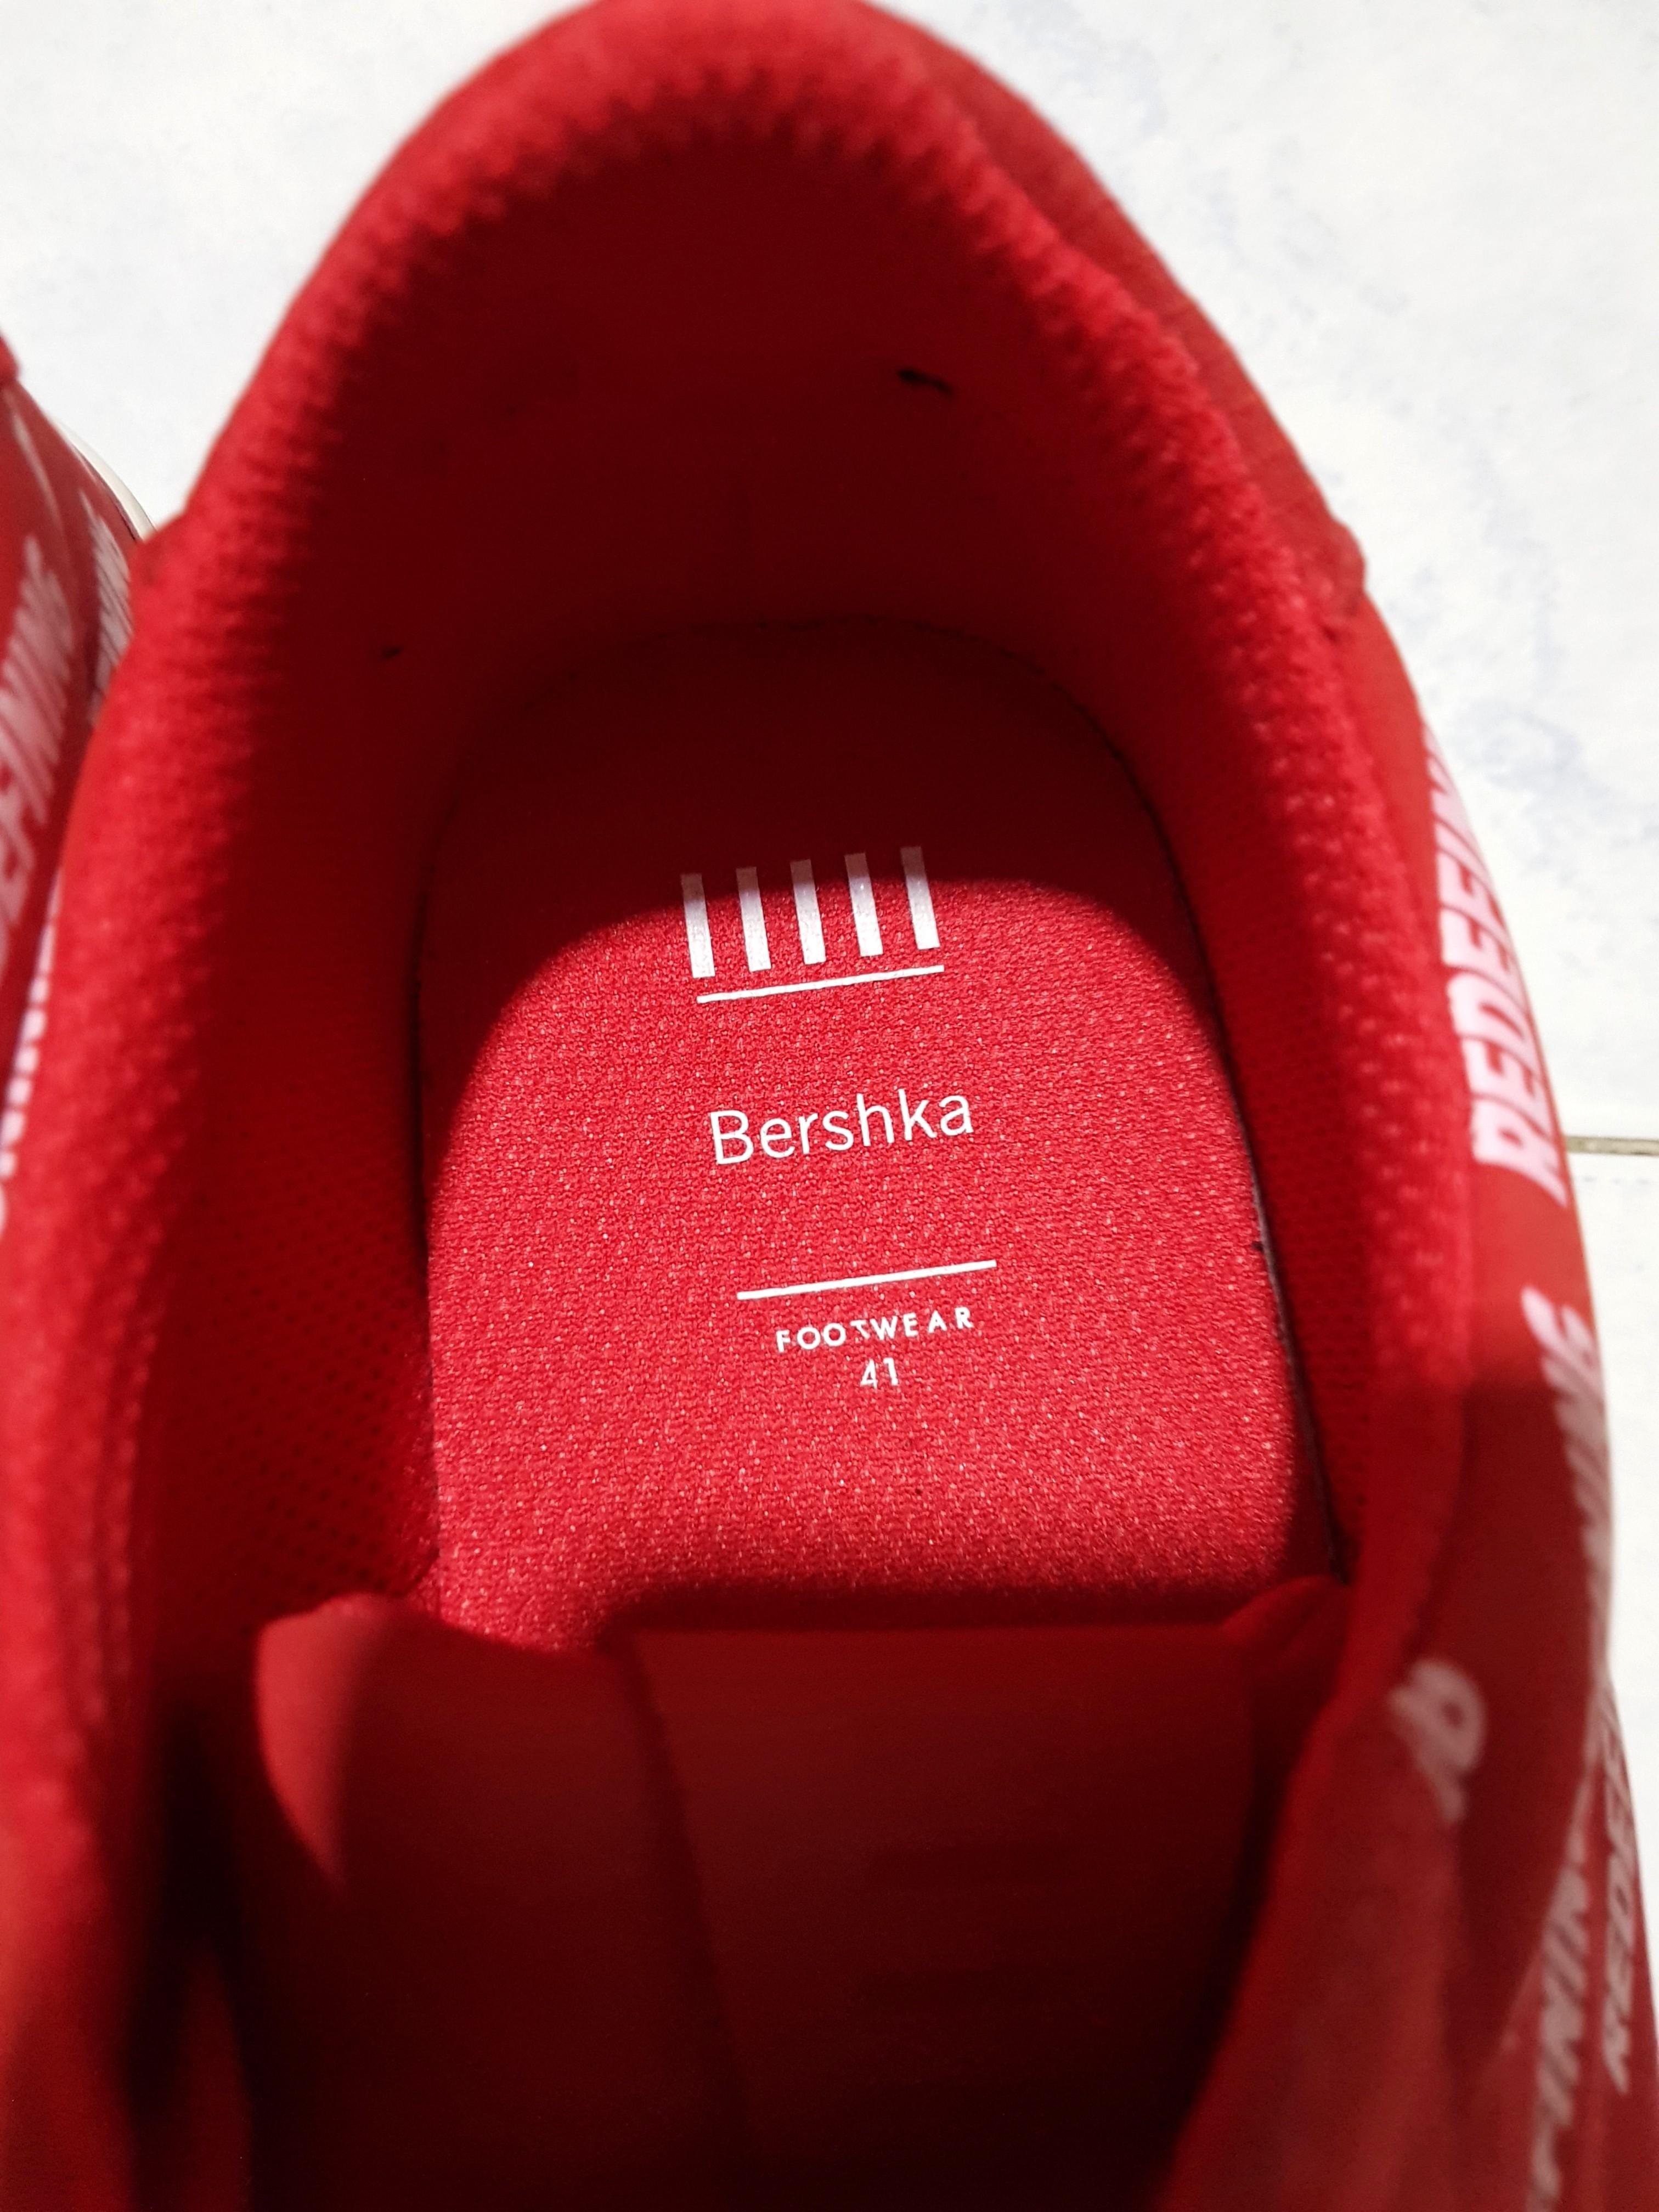 Sales) Bershka Men - Red Shoes, Men's 